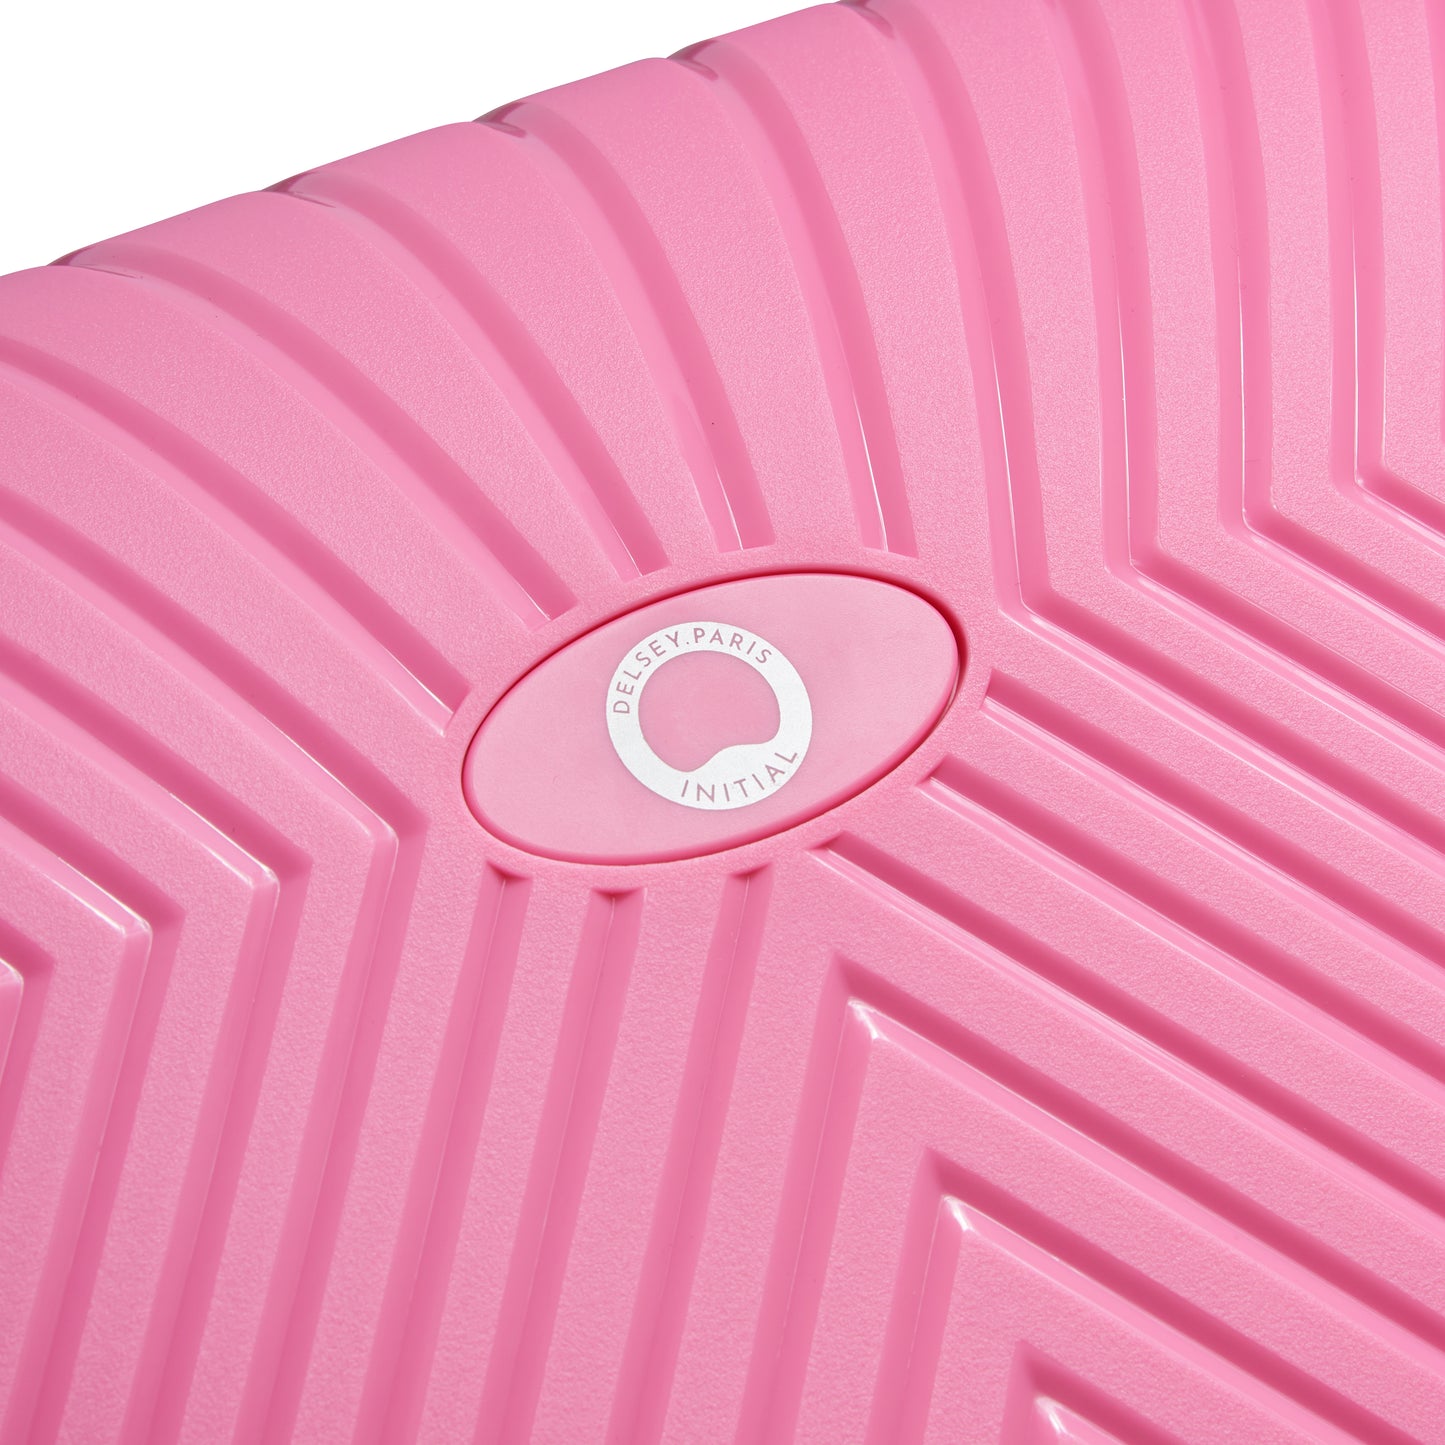 Delsey Paris Ordener Kuffert 77 cm - Travel Pink